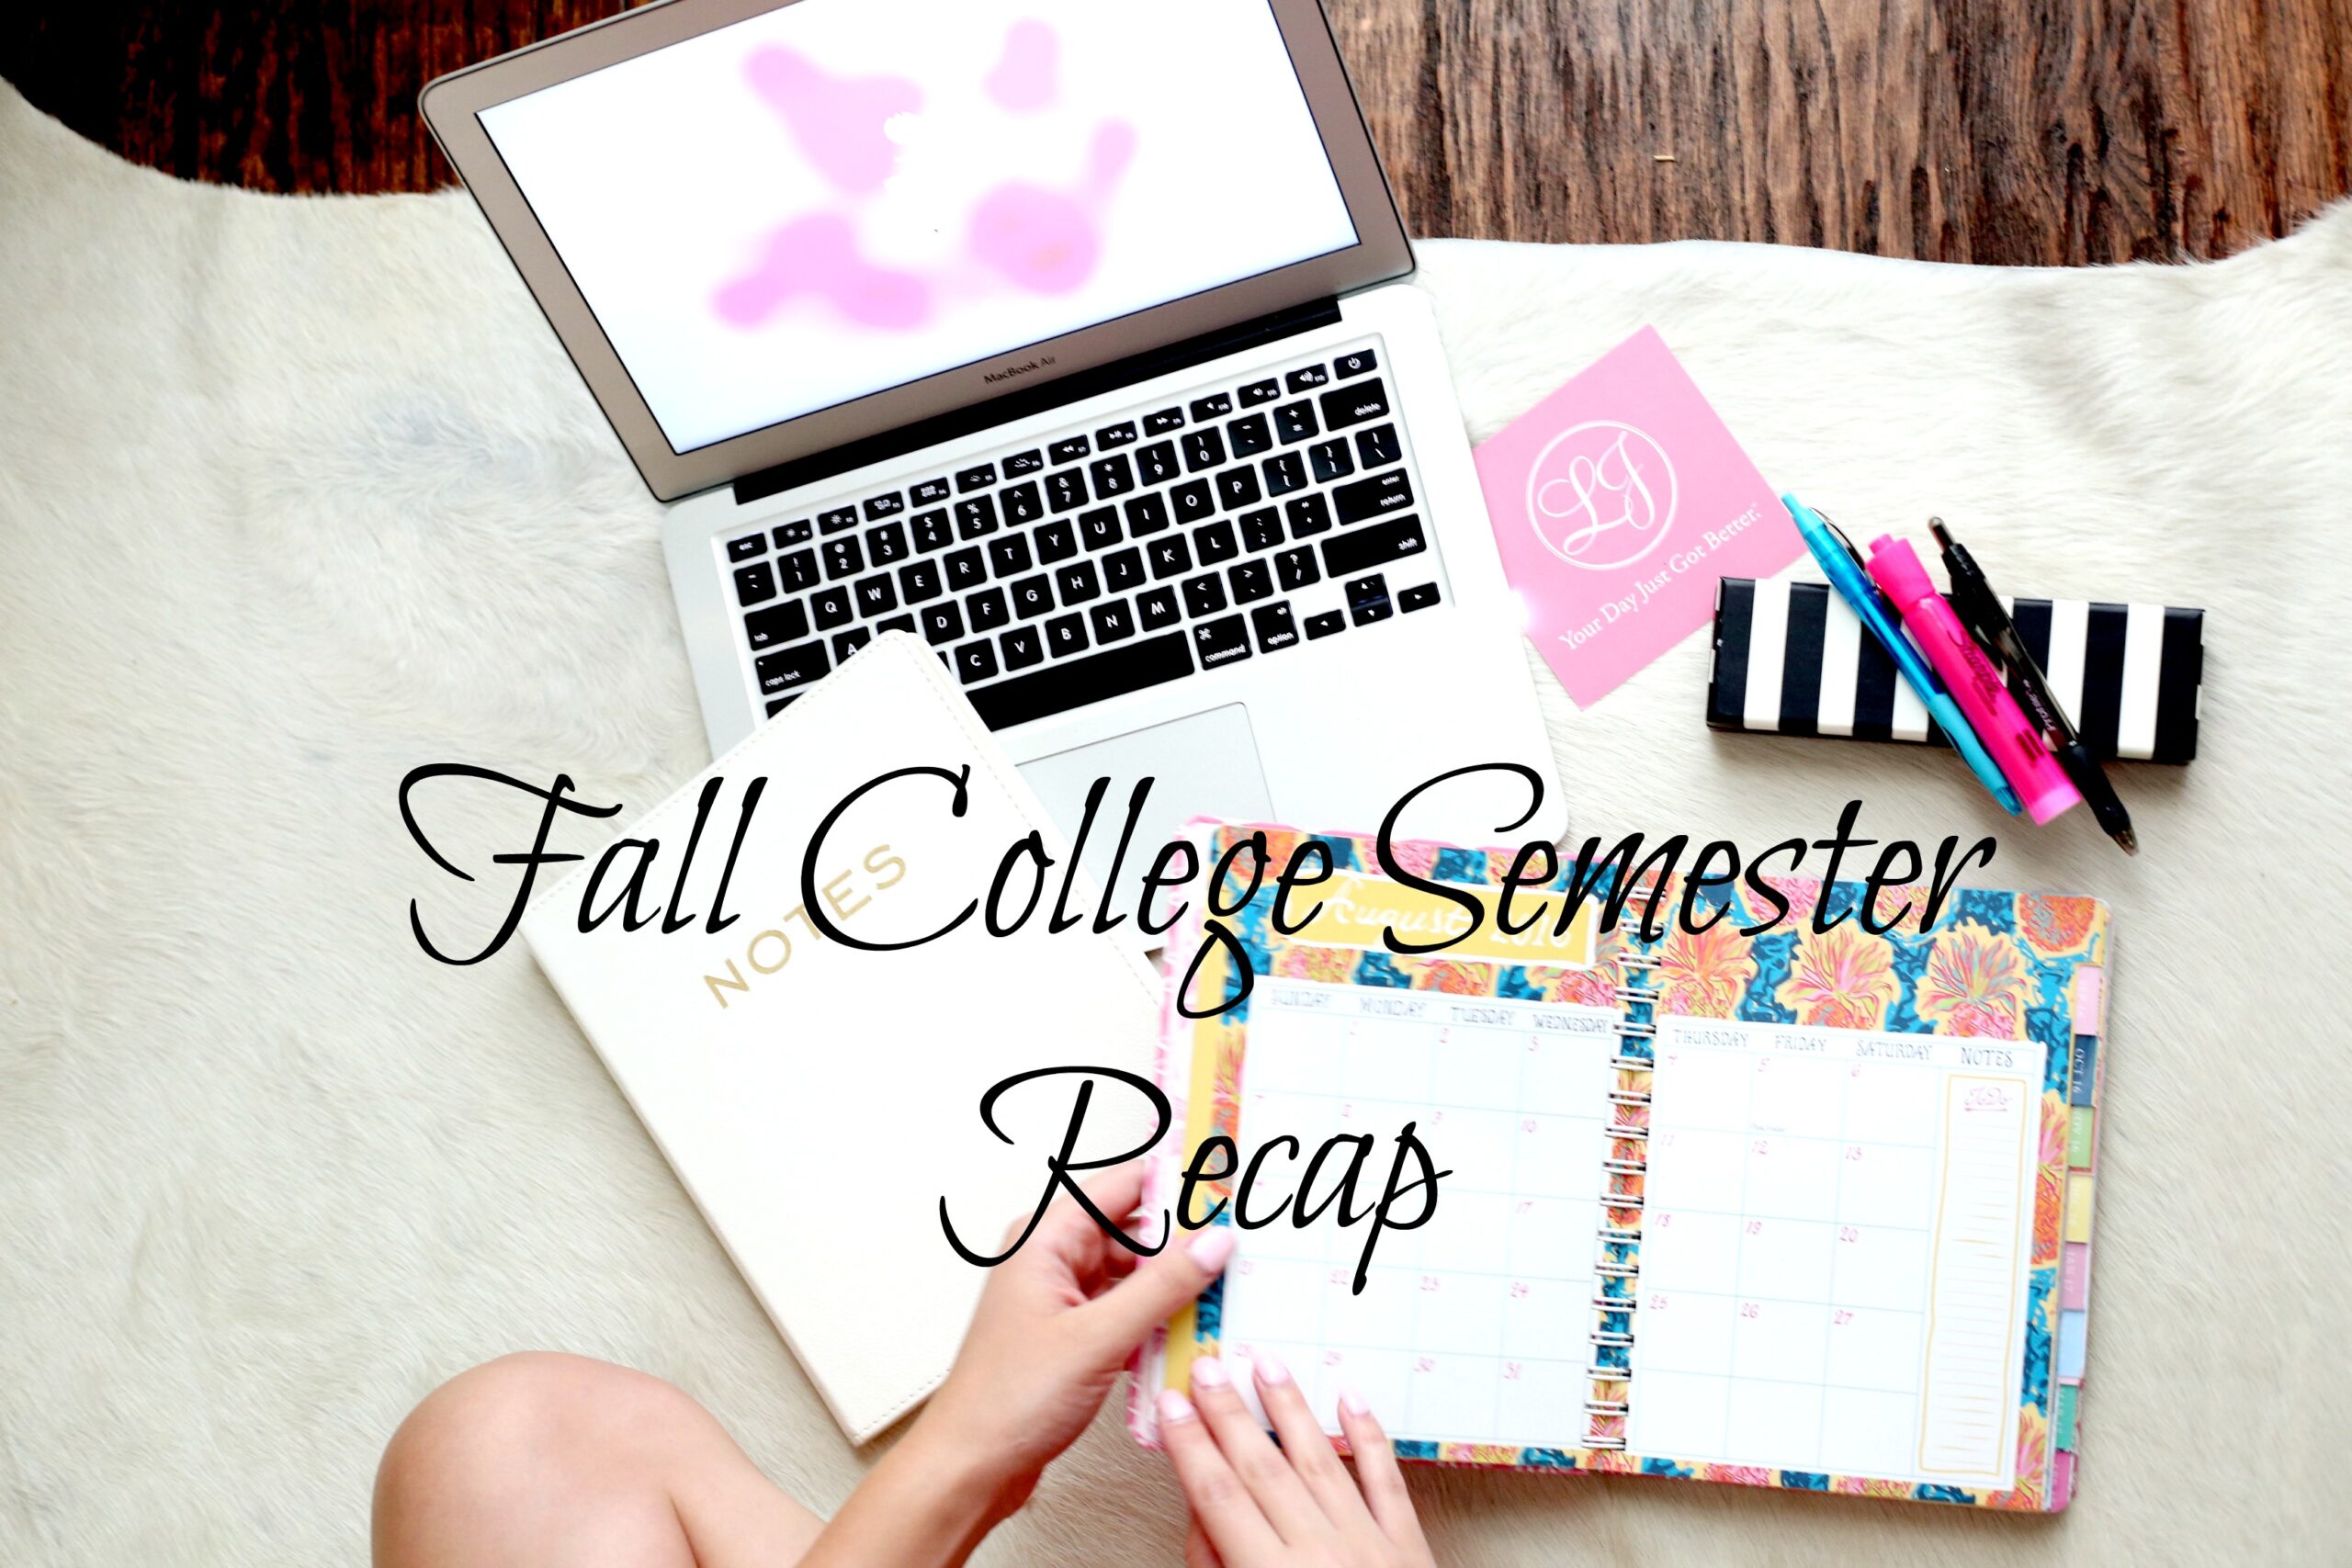 Fall 2016 College Semester Re-cap